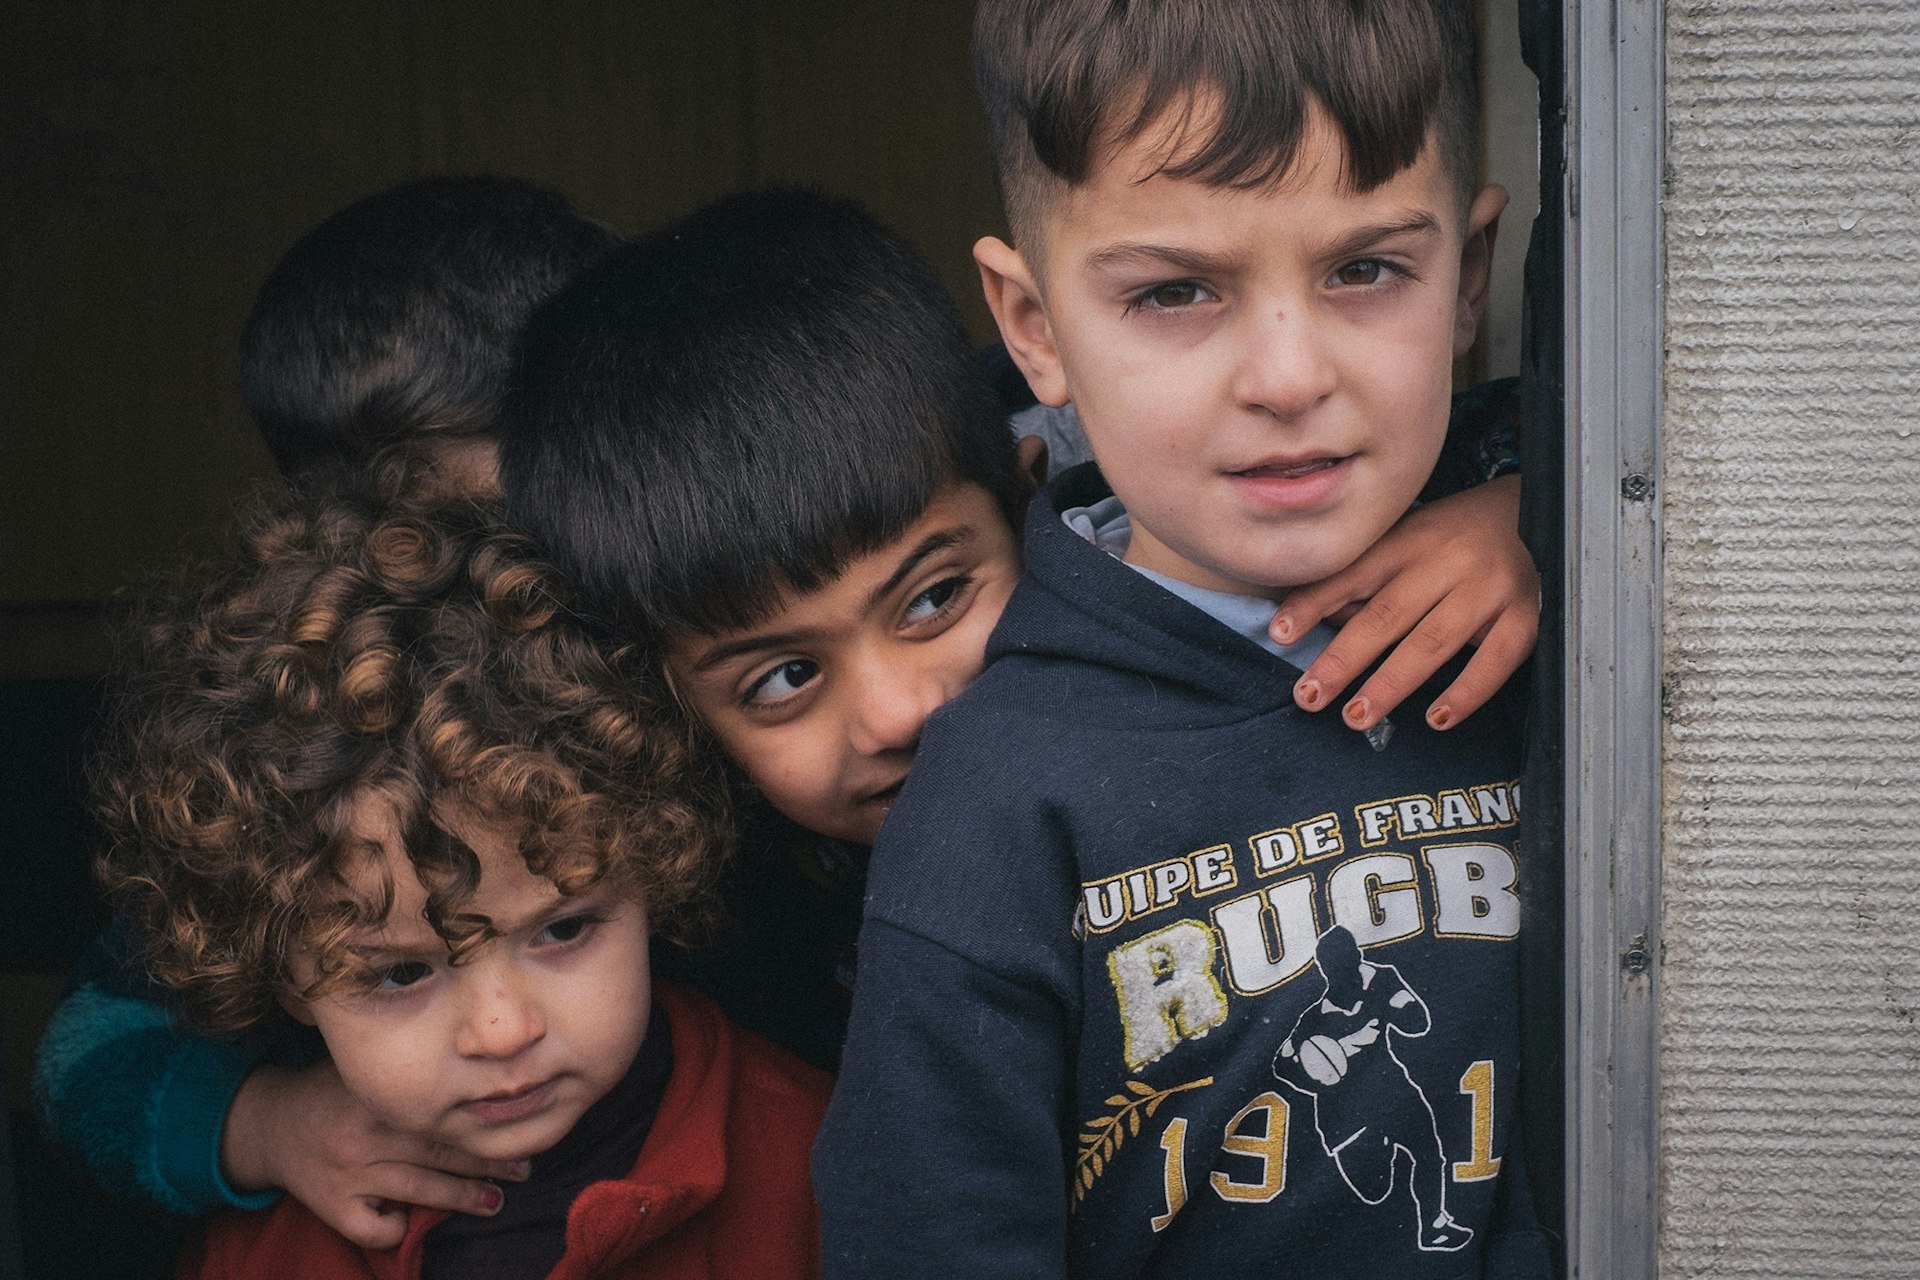 The Kids of Calais: Portraits of Europe's forgotten children